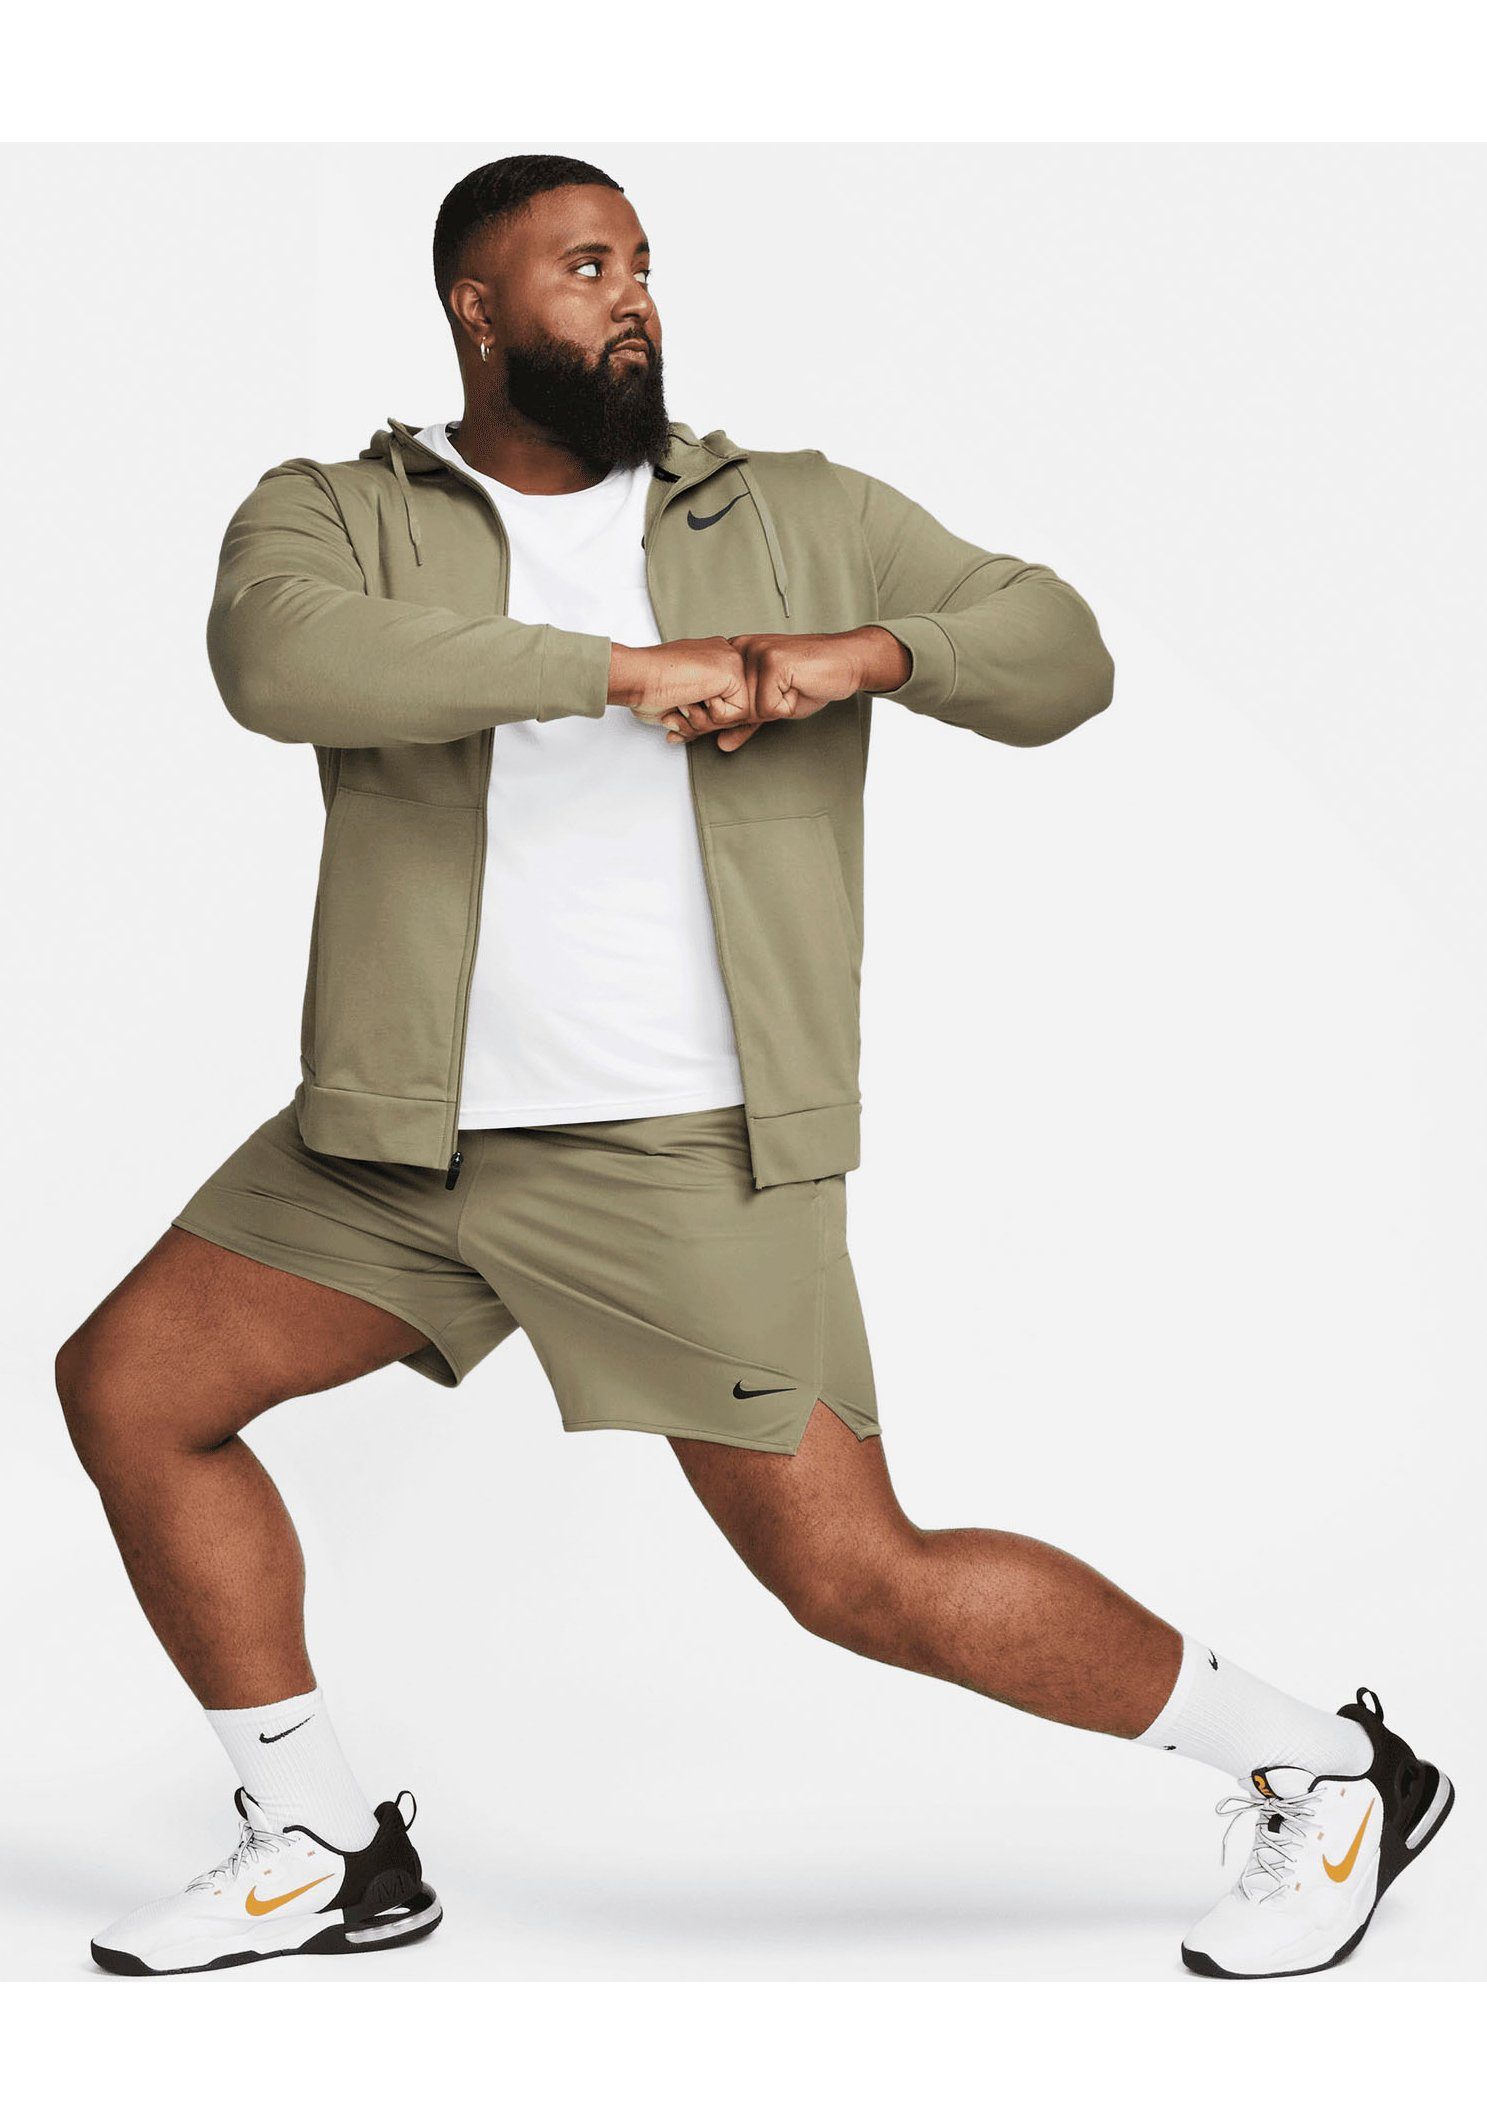 HOODIE MEN'S Nike FULL-ZIP TRAINING Kapuzensweatjacke braun DRI-FIT